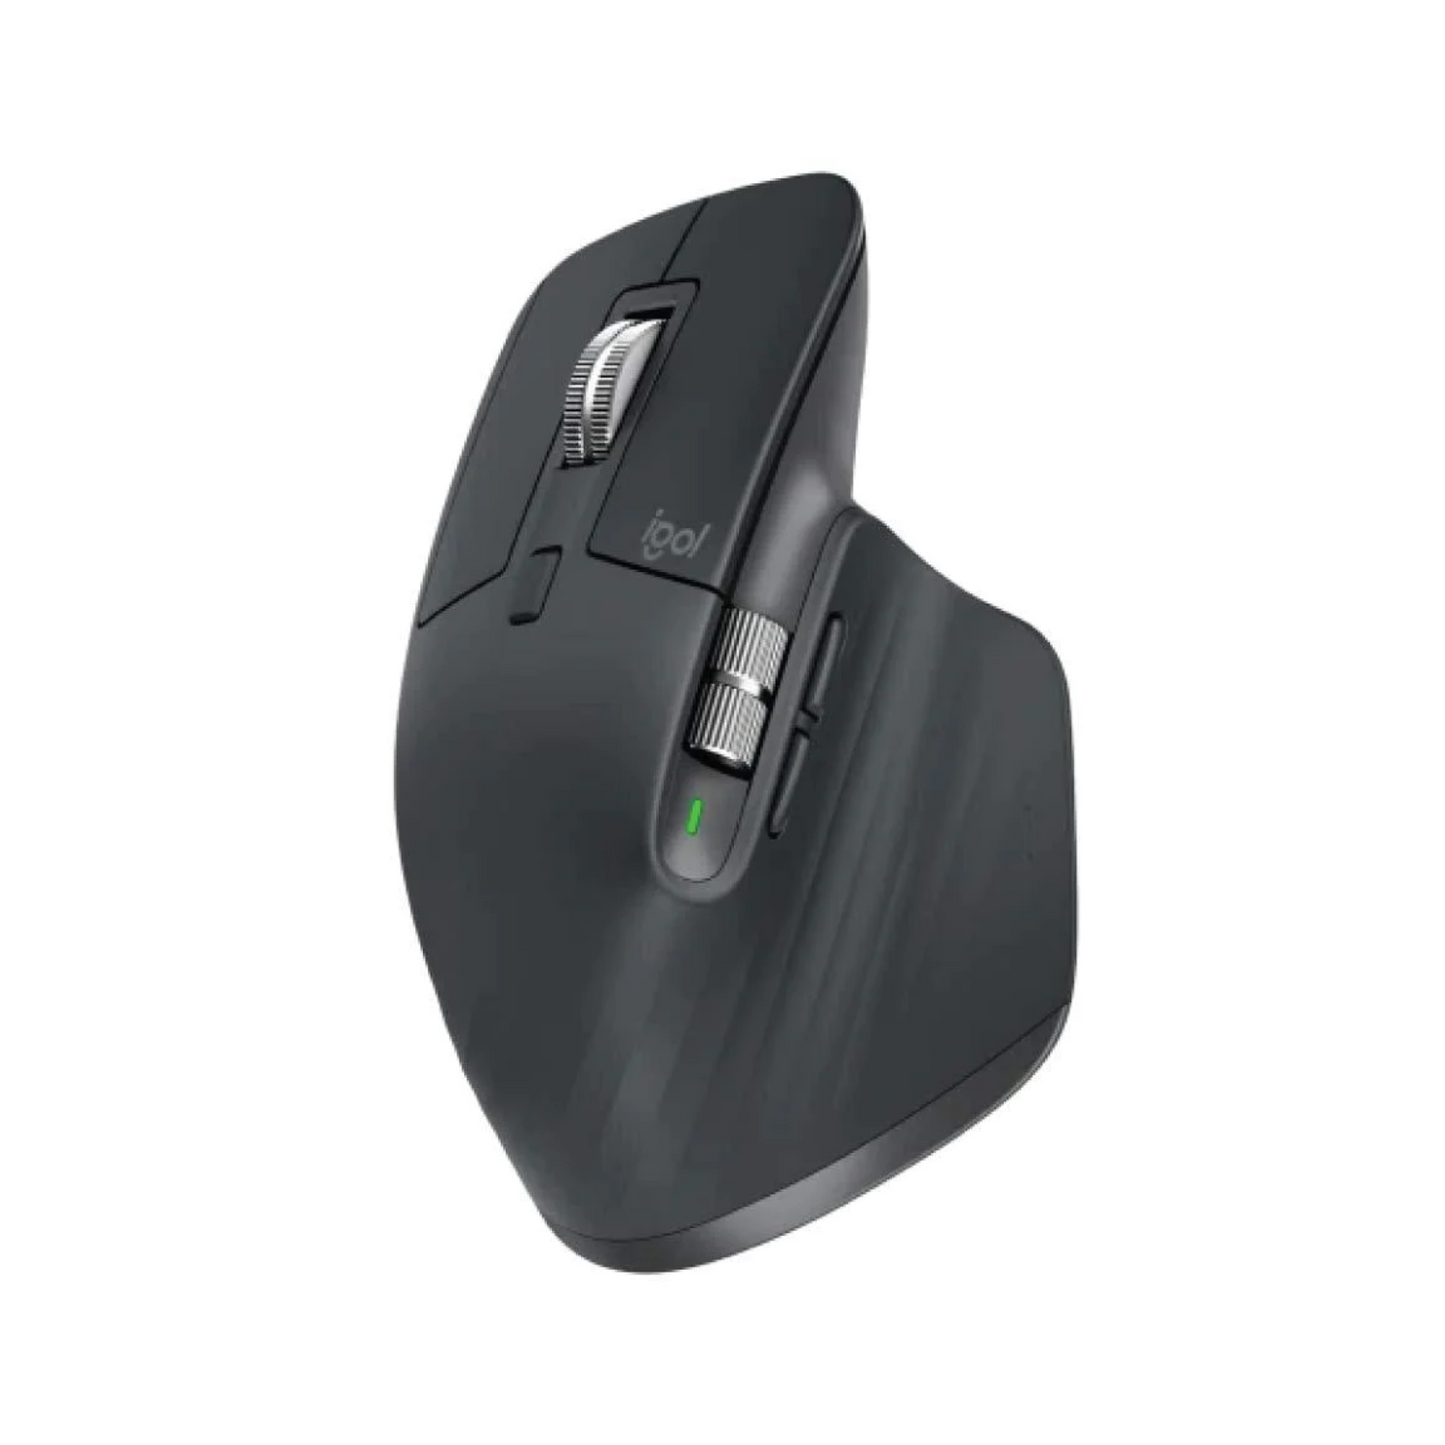 Logitech MX Master 2S Mouse